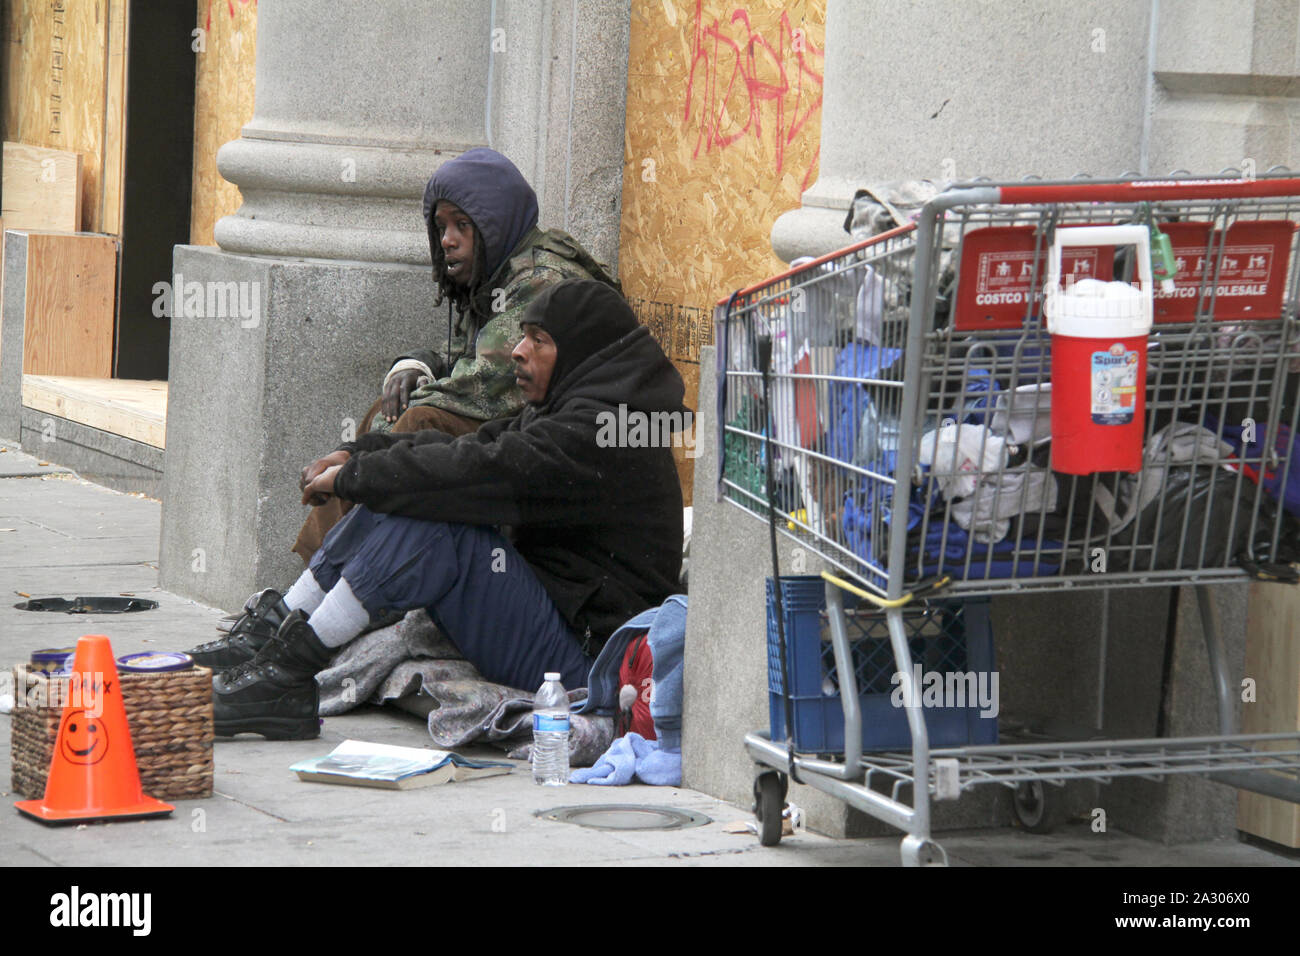 Men begging on the streets of Washington D.C., USA Stock Photo